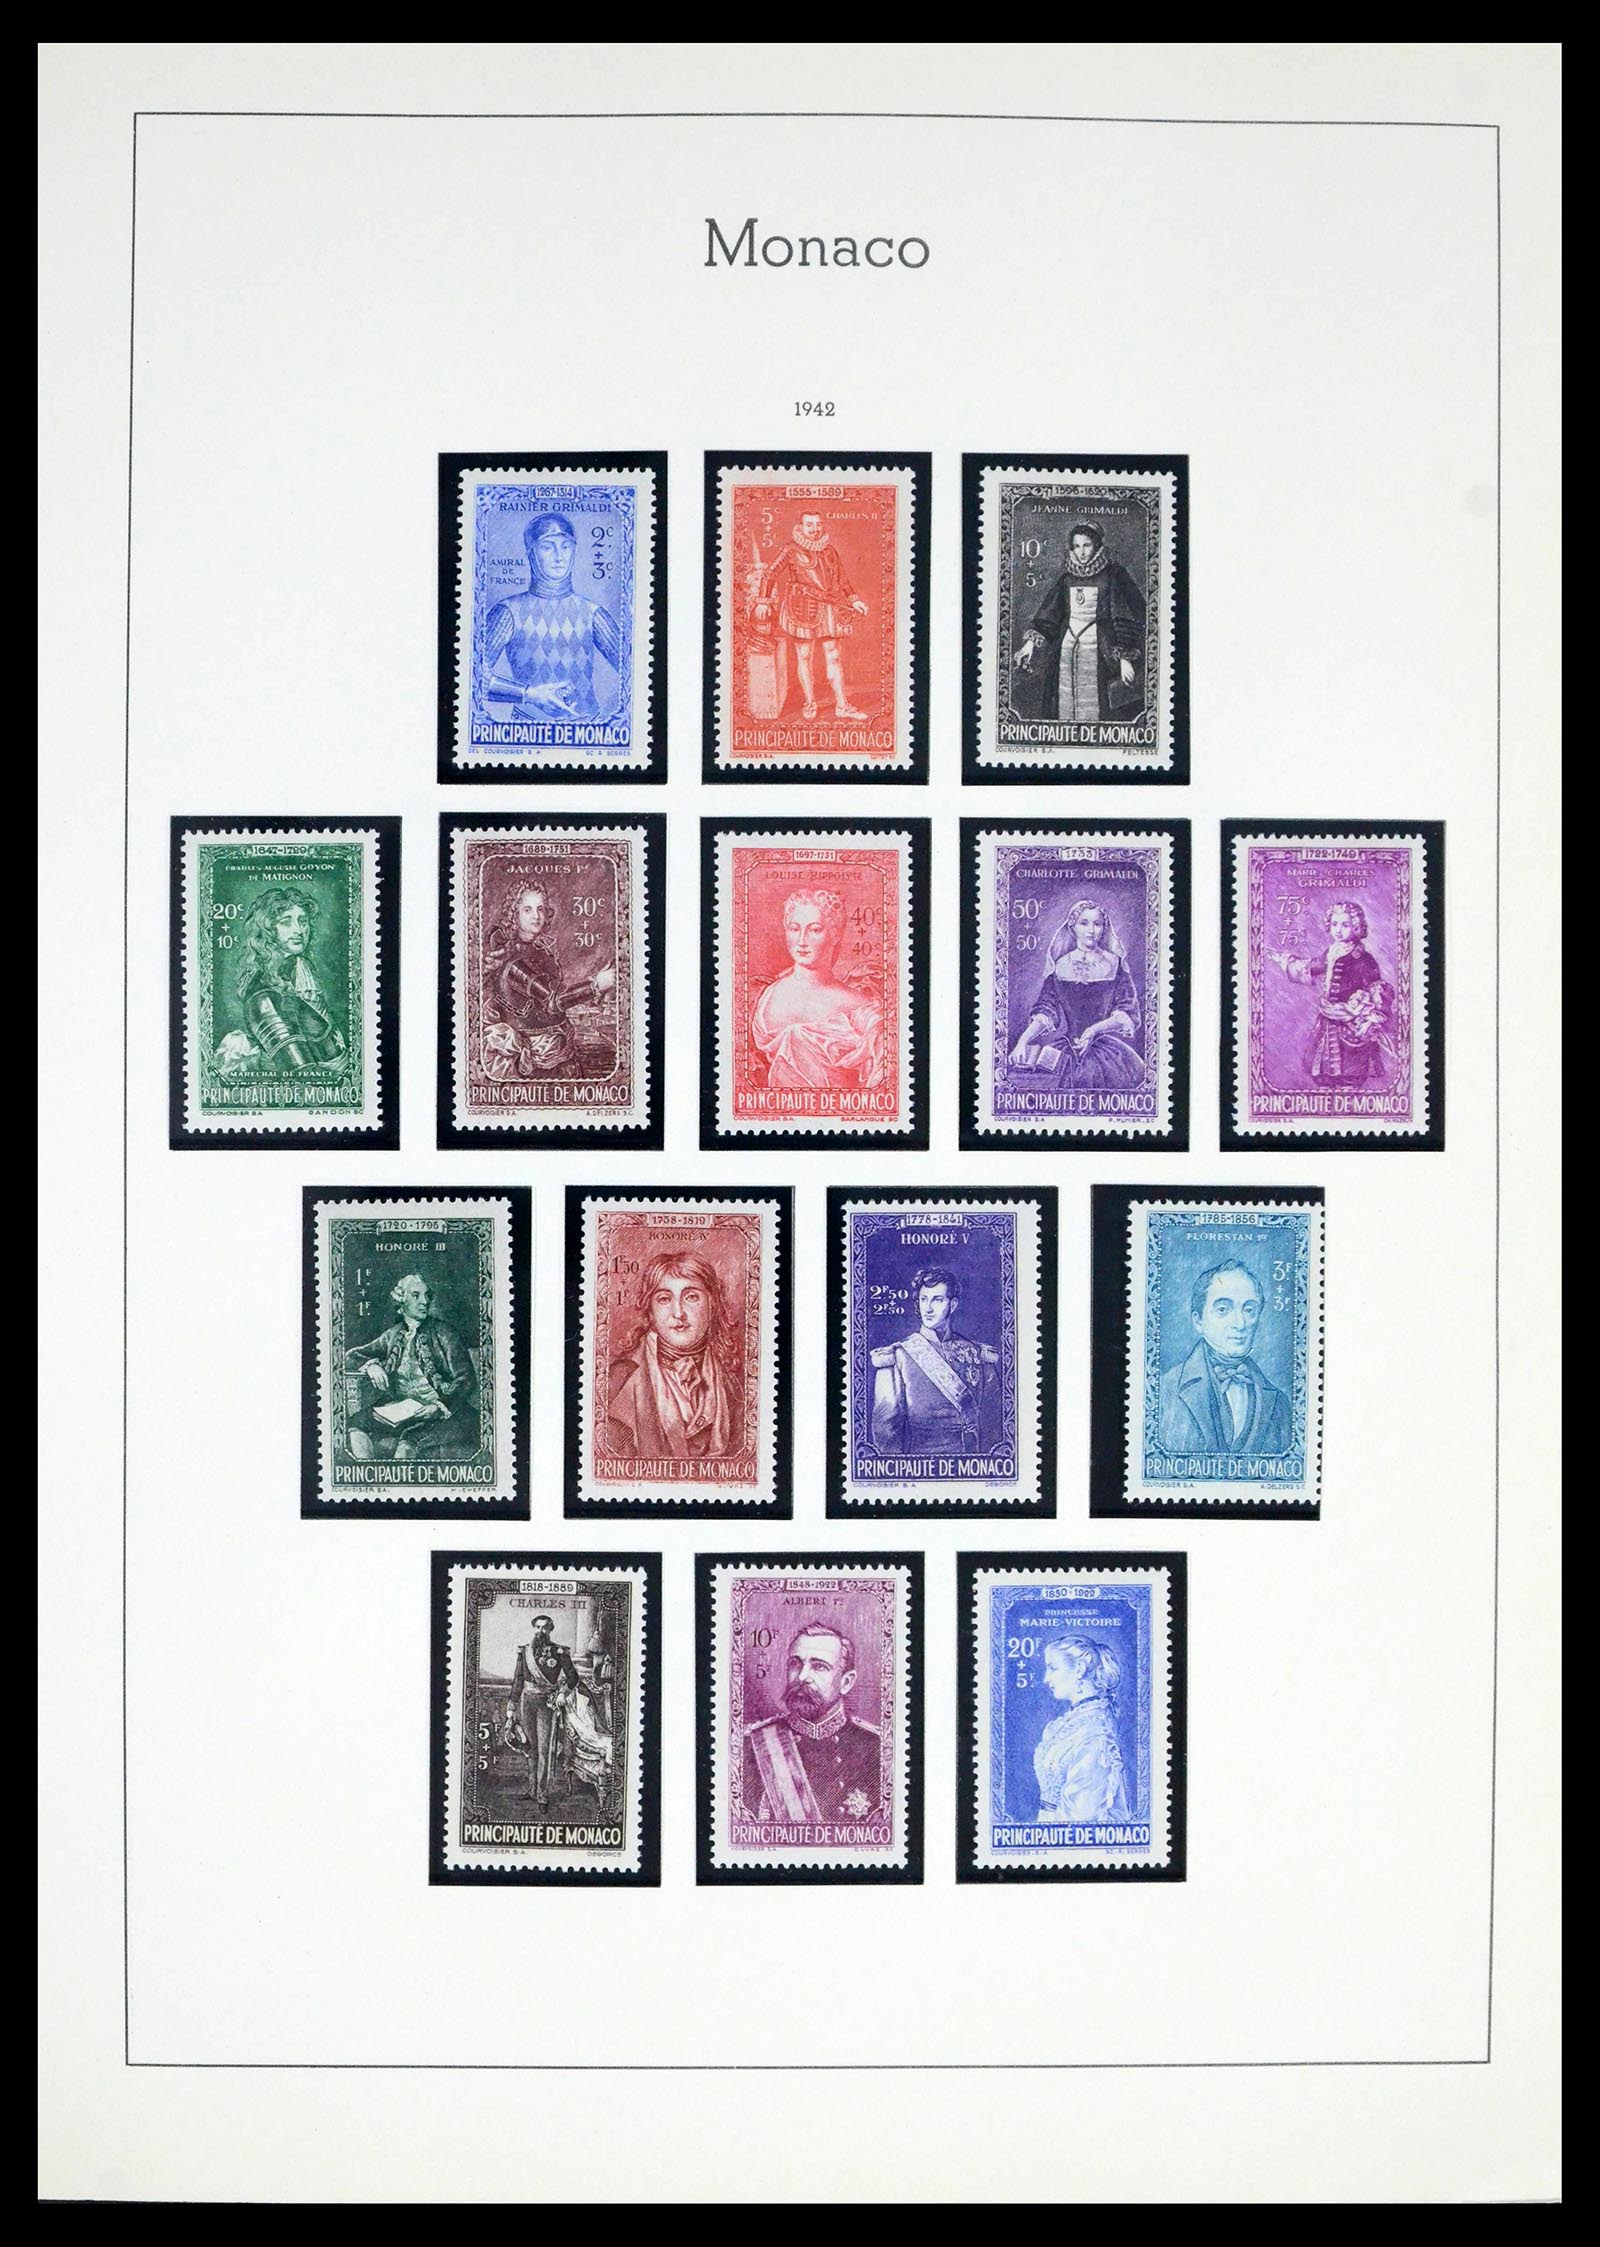 39392 0021 - Stamp collection 39392 Monaco 1885-1999.